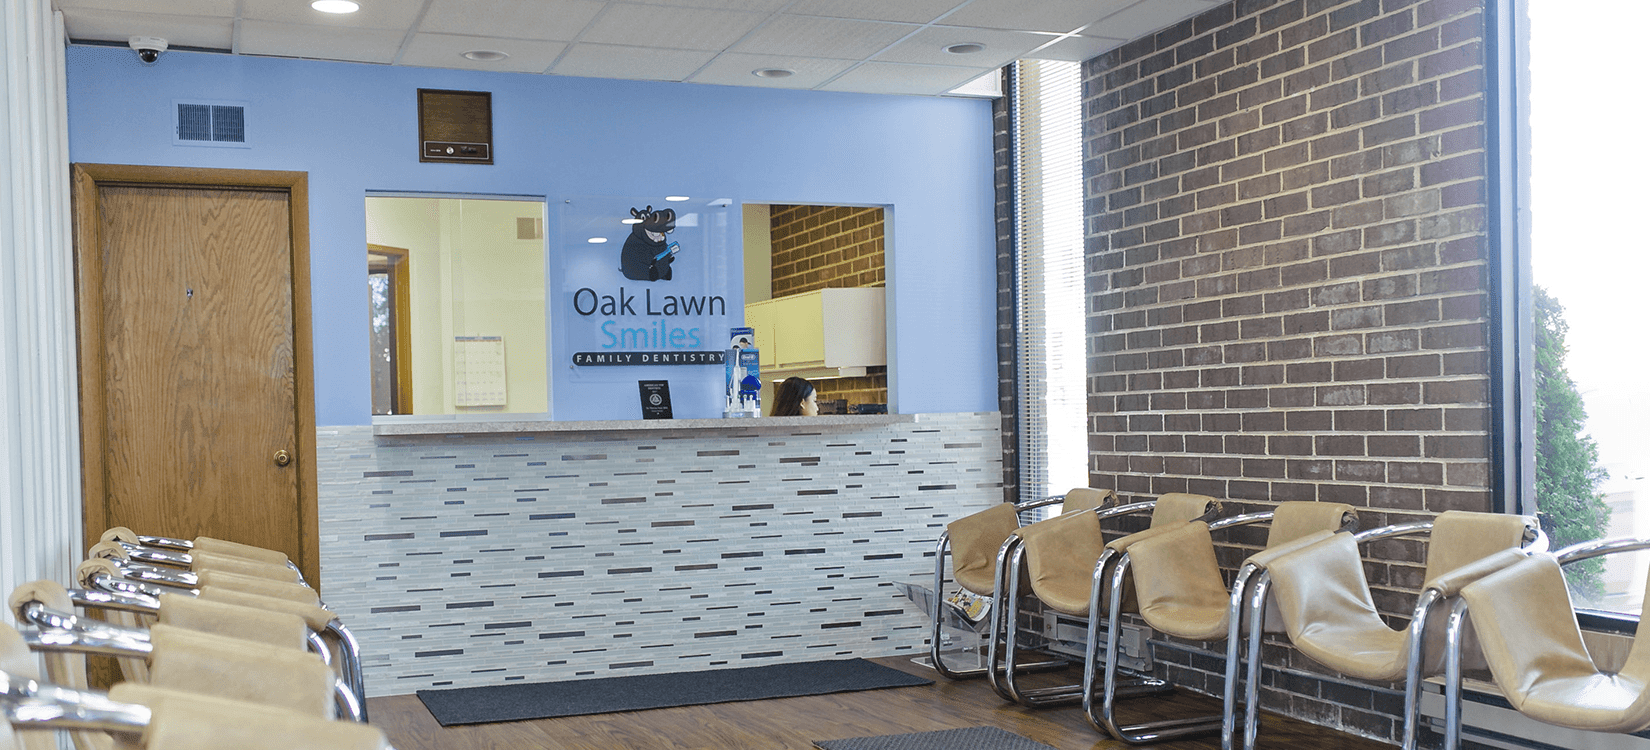 Oak Lawn Smiles Family Dentistry Office